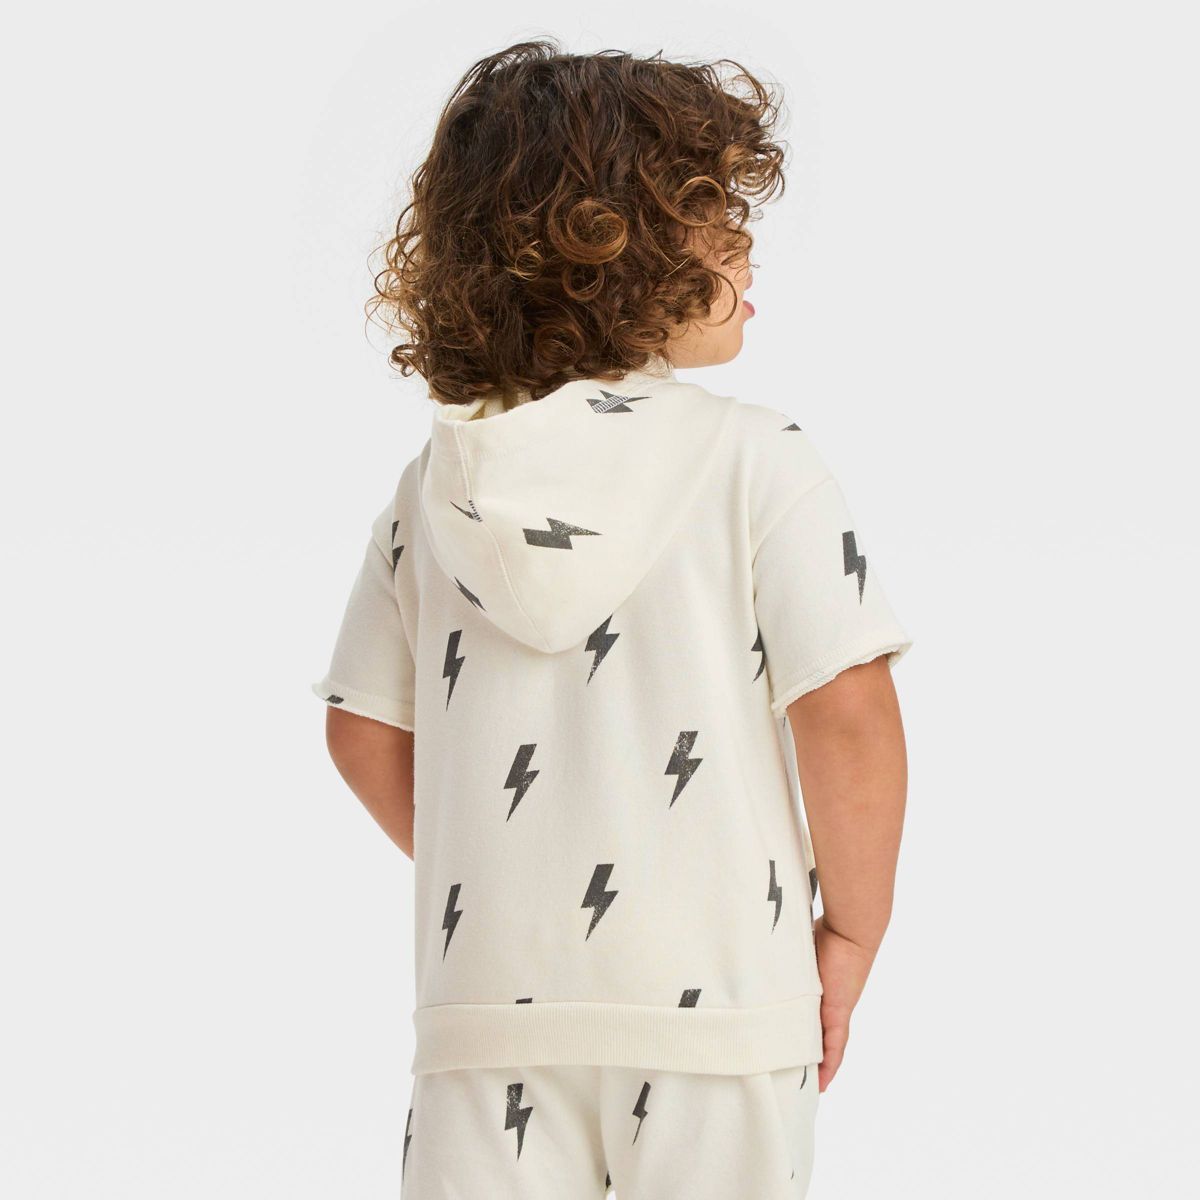 Grayson Mini Toddler Boys' Short Sleeve French Terry Lightning Bolt Hoodie - Off-White | Target